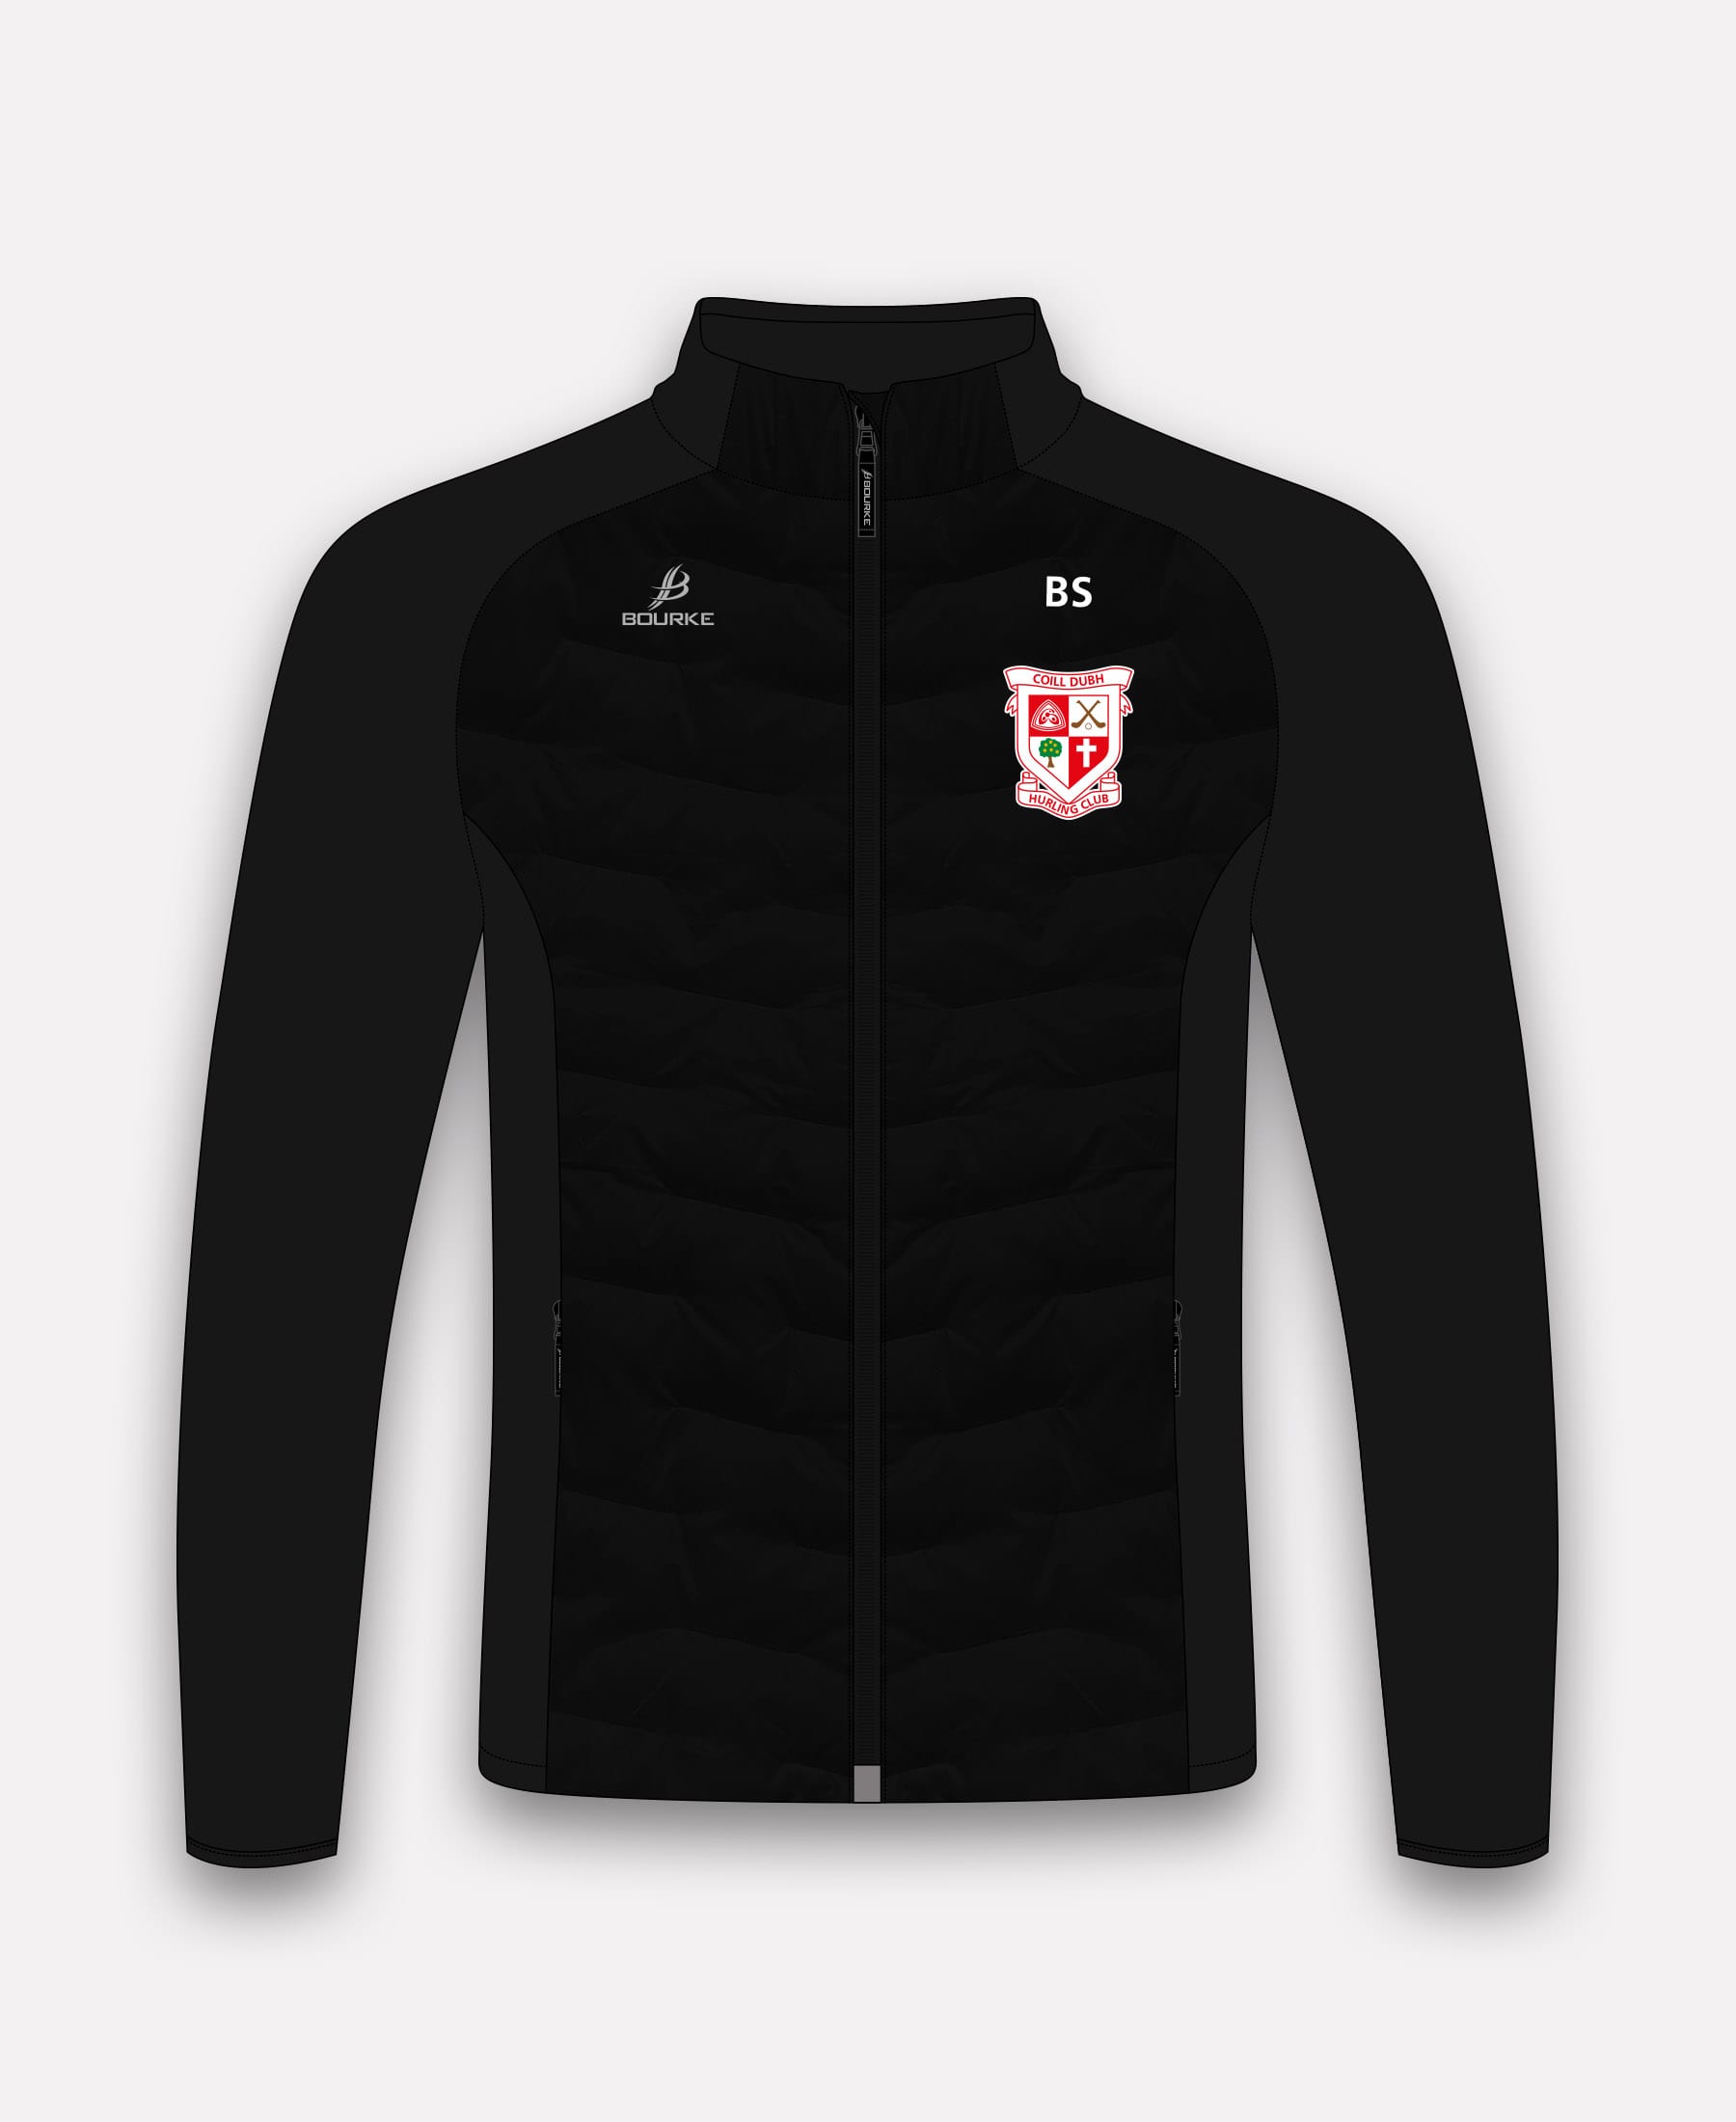 Coill Dubh Hurling Club Croga Hybrid Jacket (Black)